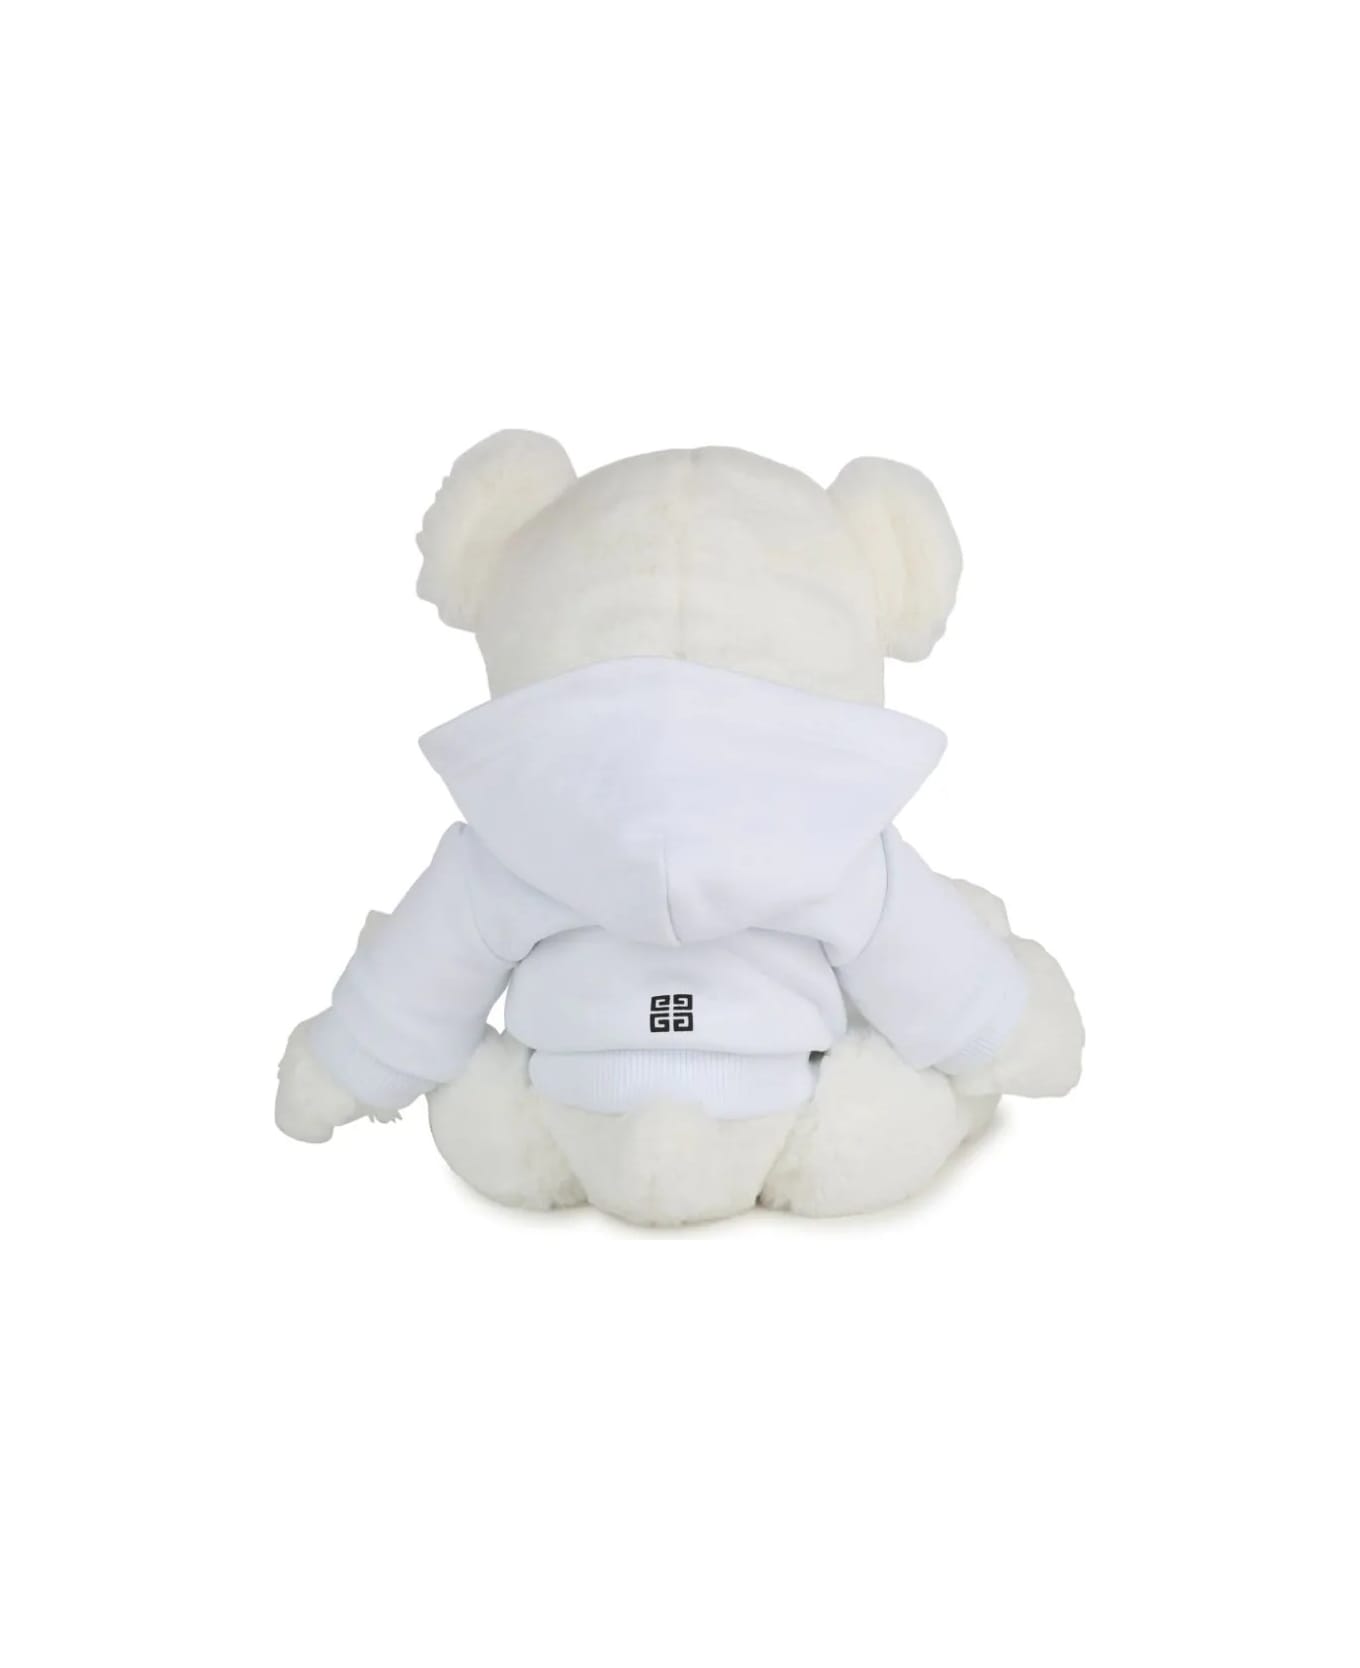 Givenchy White Givenchy Teddy Bear Plush - White アクセサリー＆ギフト